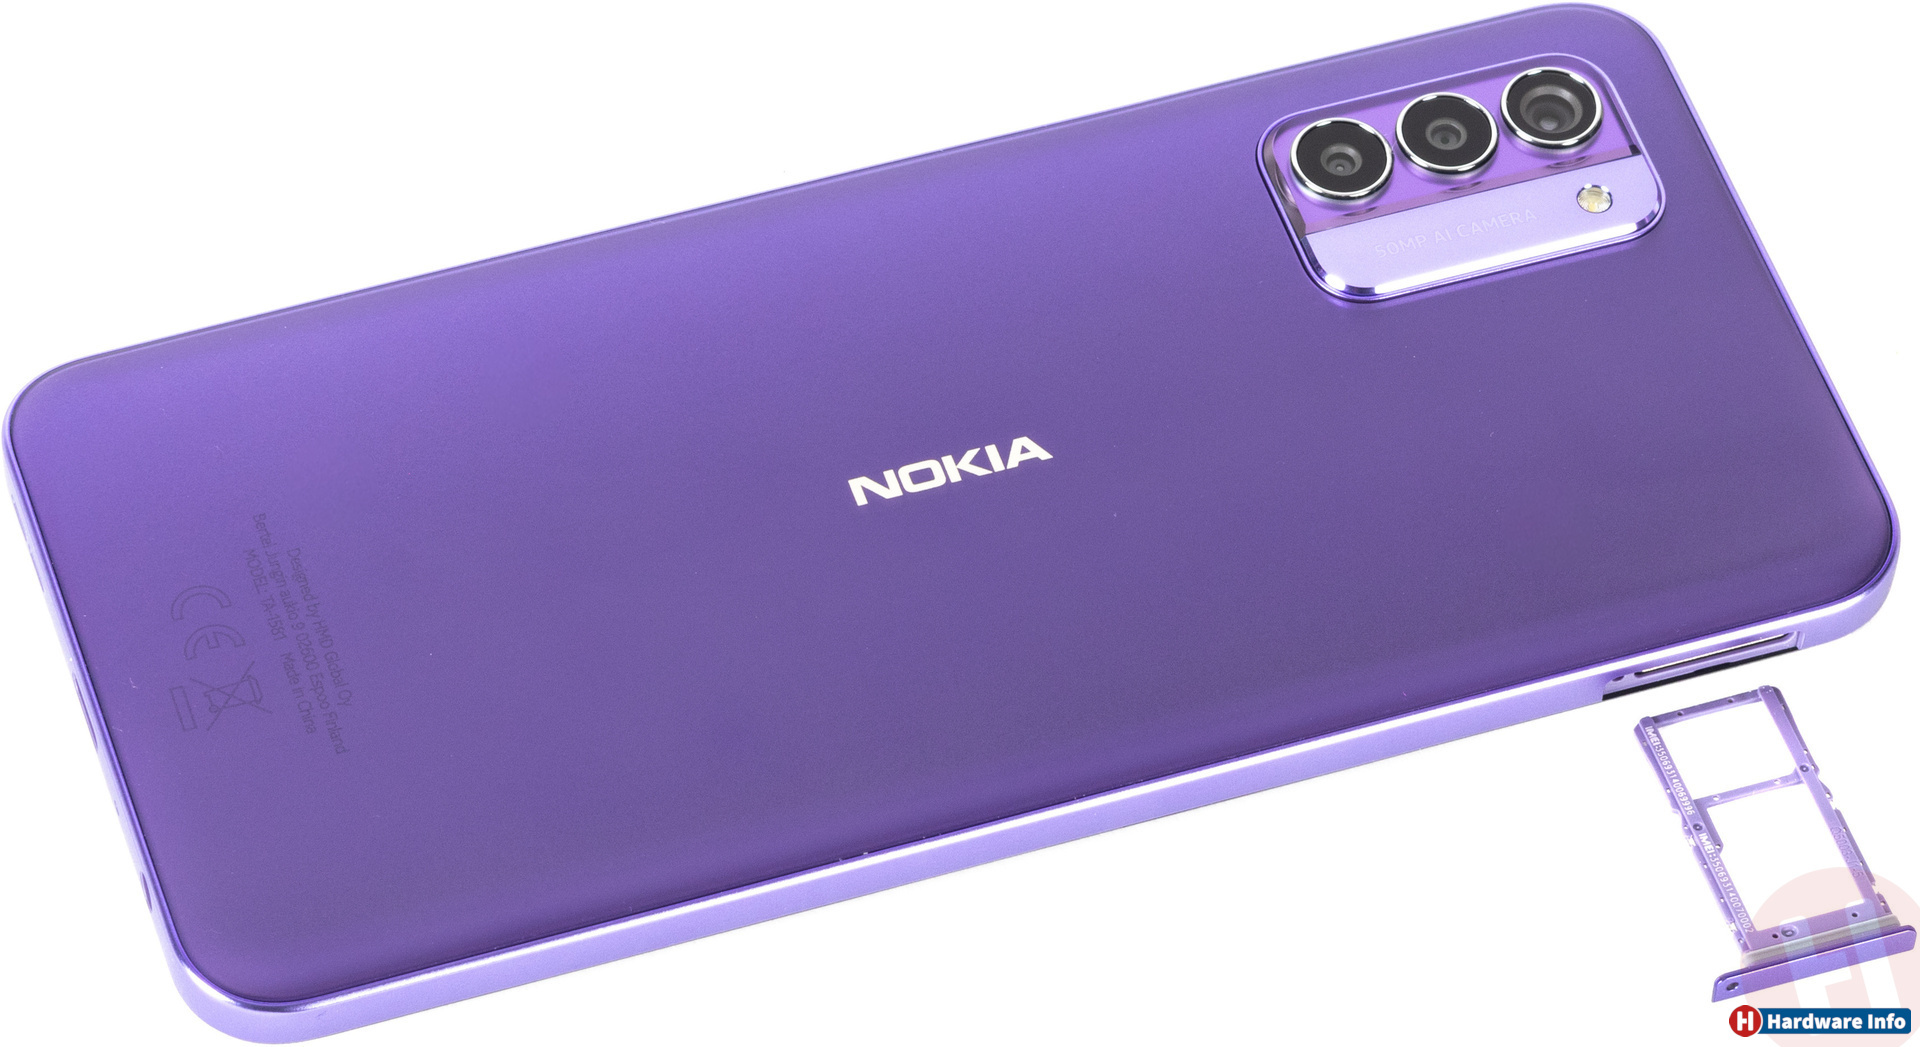 Nokia G42 128GB Purple smartphone - Hardware Info